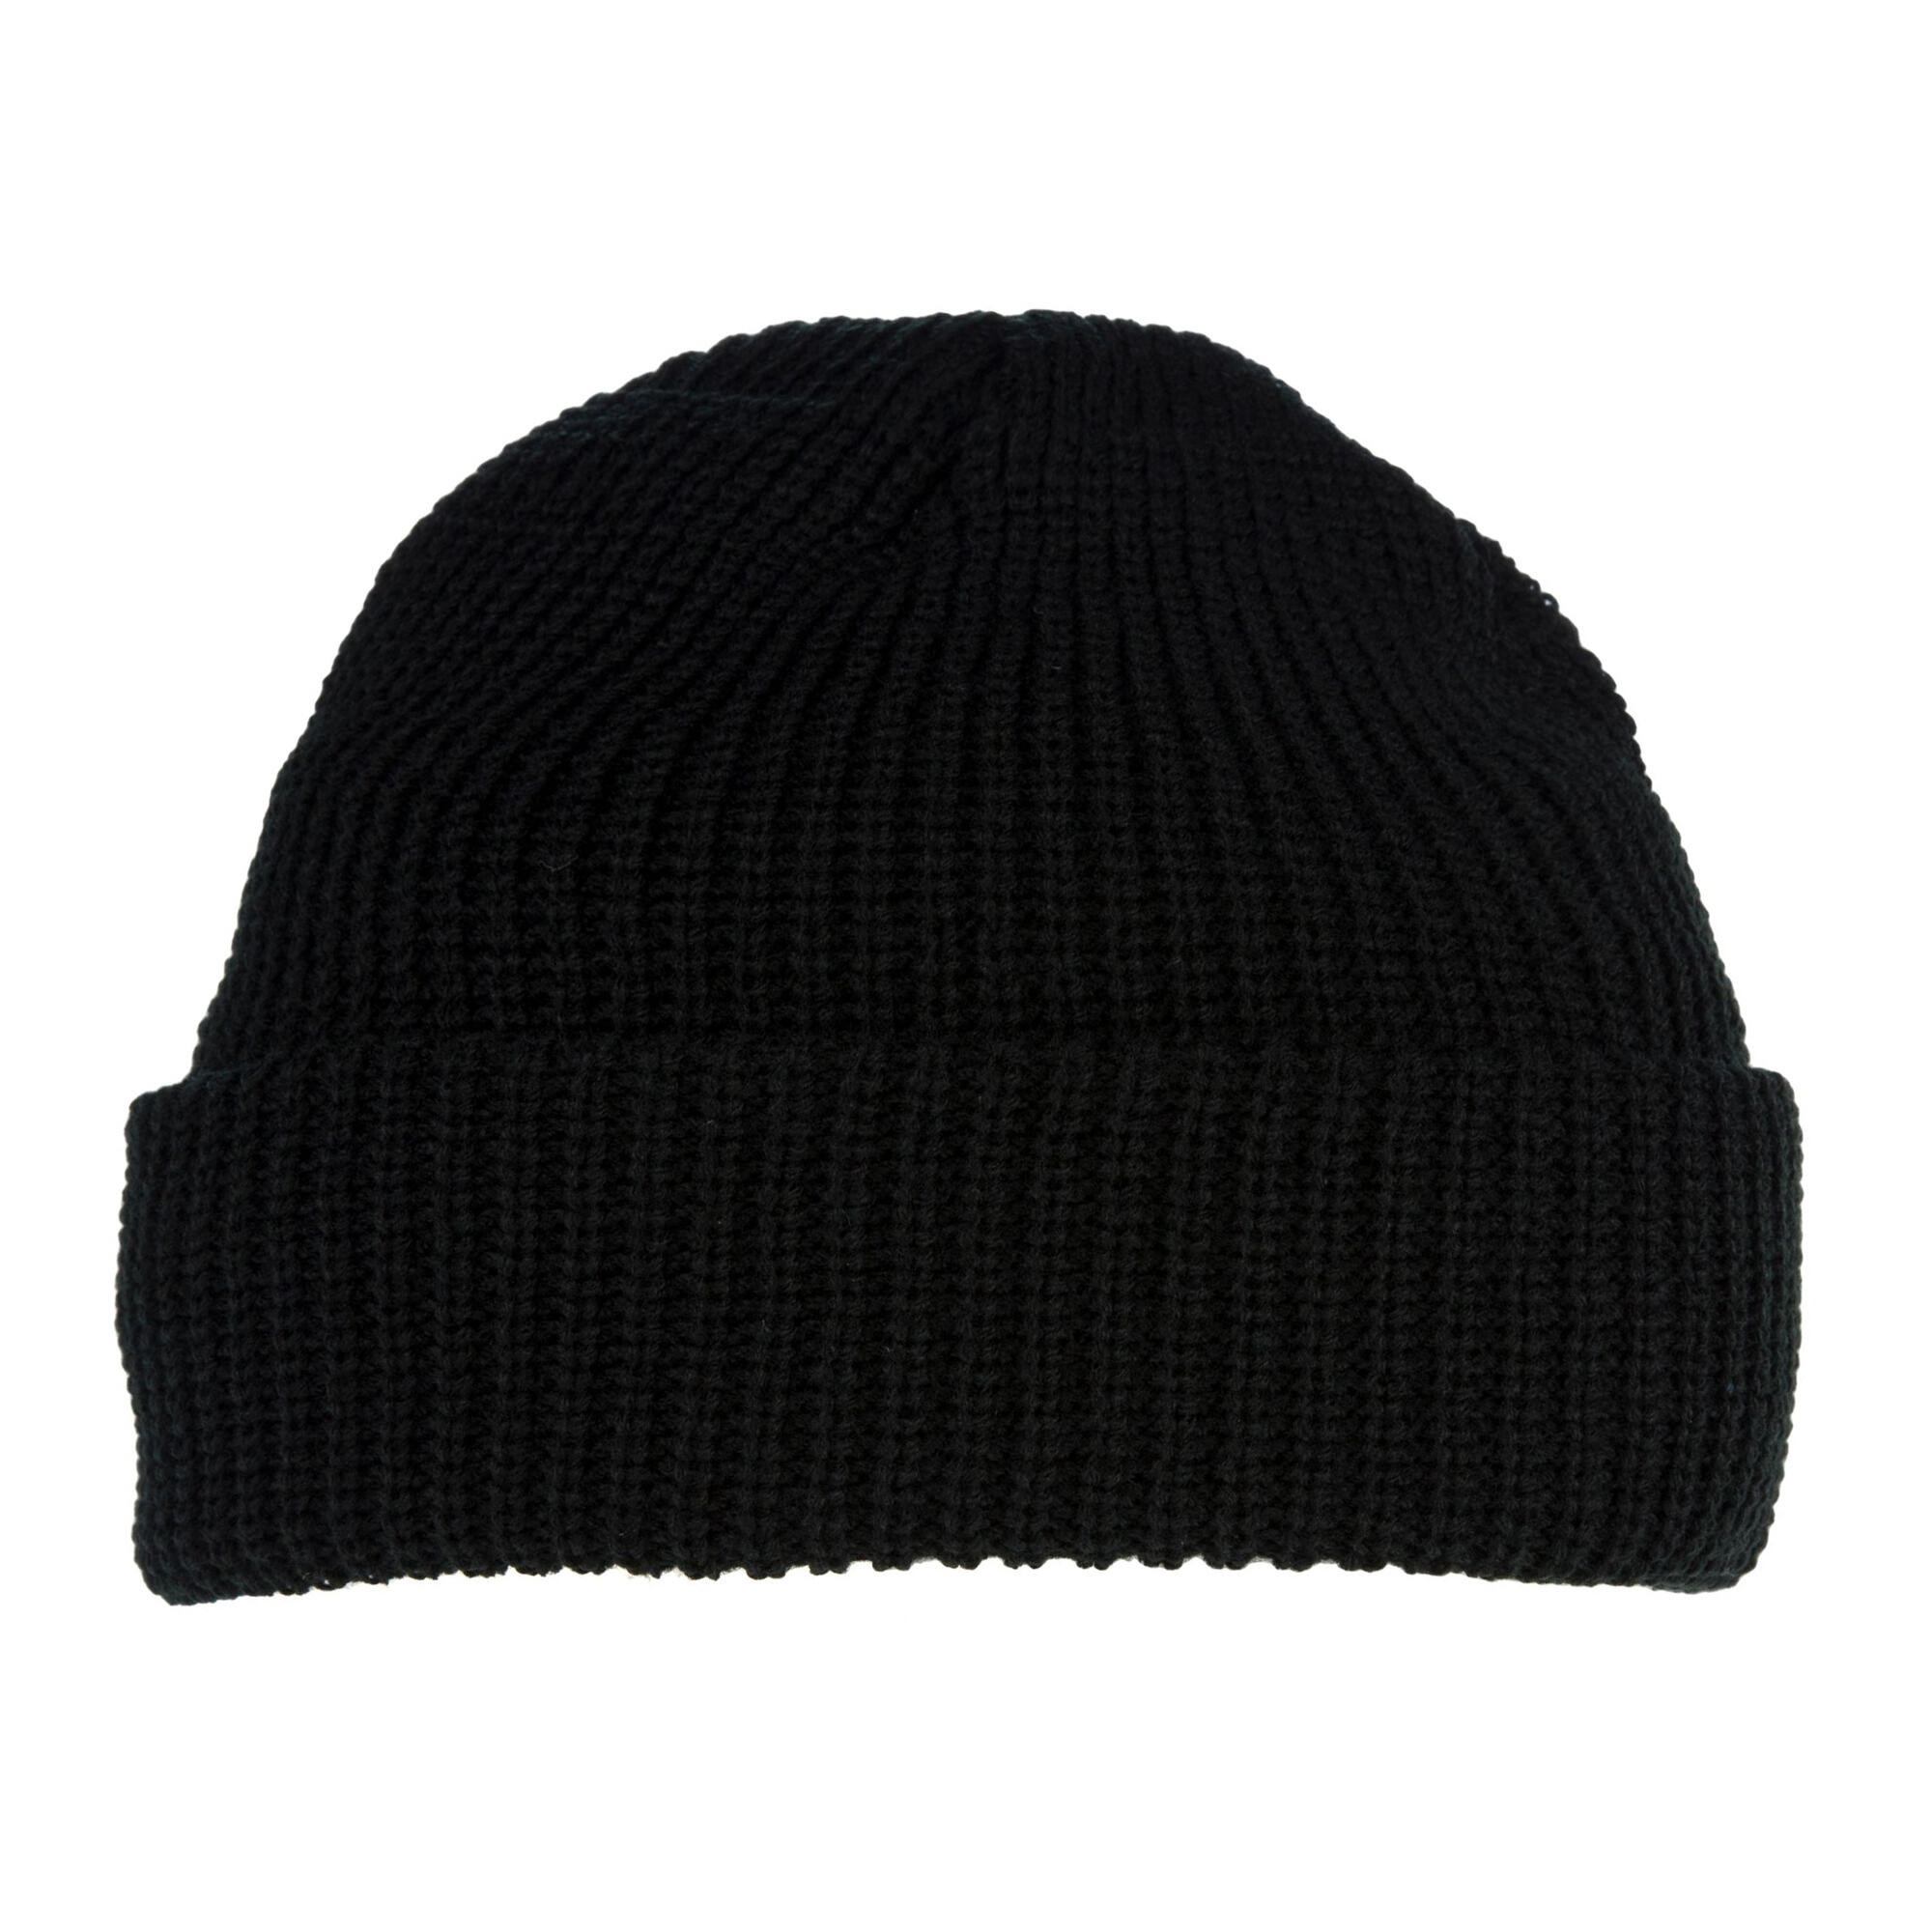 Unisex Fully Ribbed Winter Watch Cap / Hat (Black) 1/4